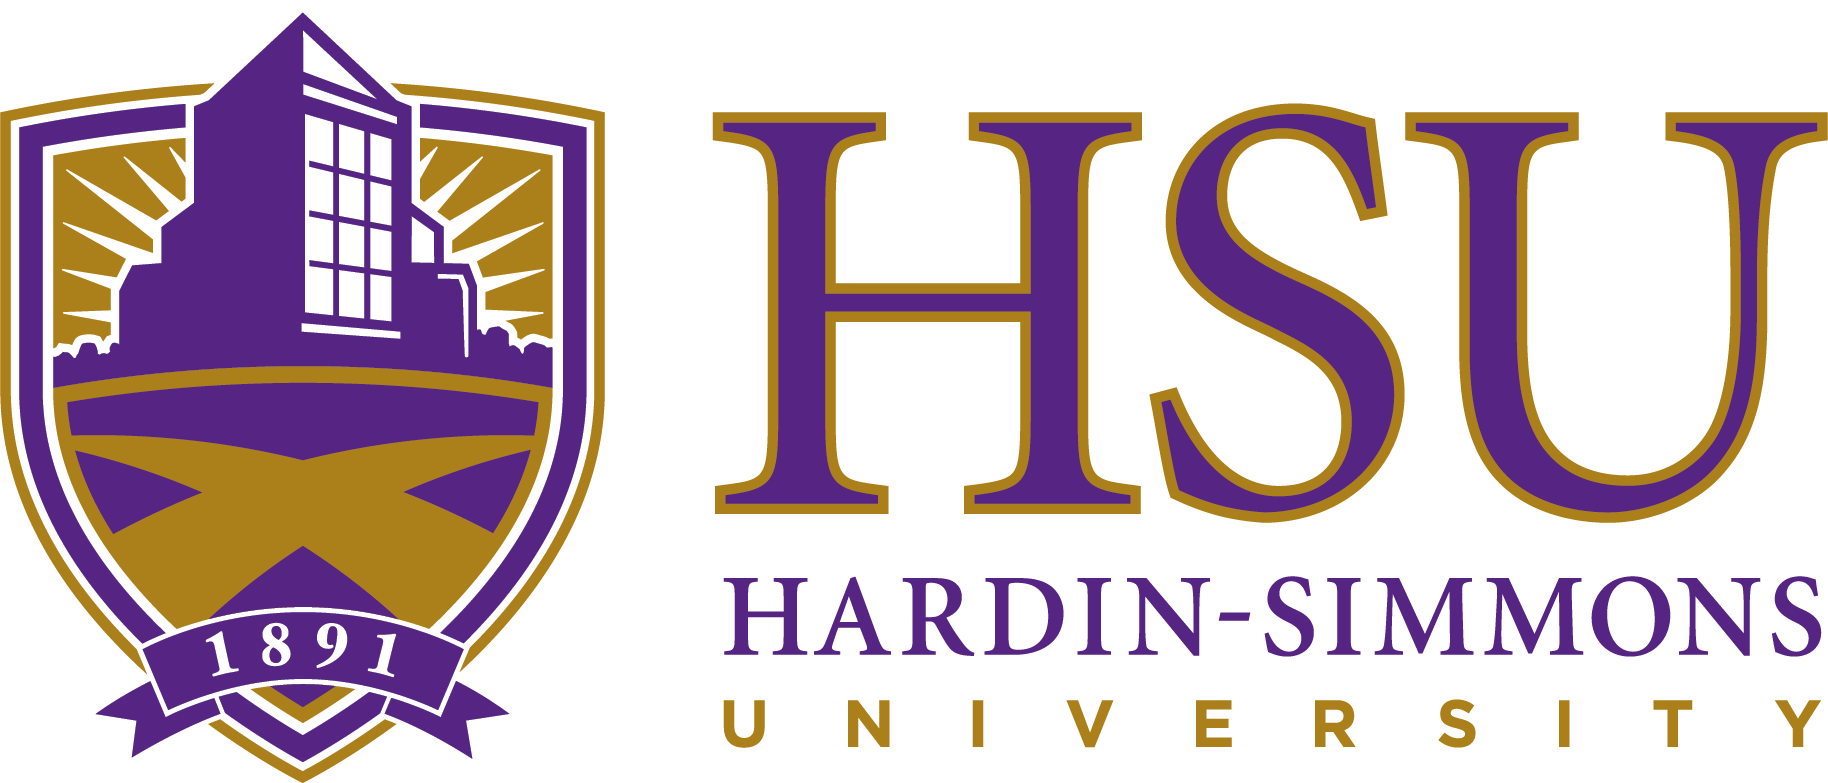 Hardin-Simmons Logo